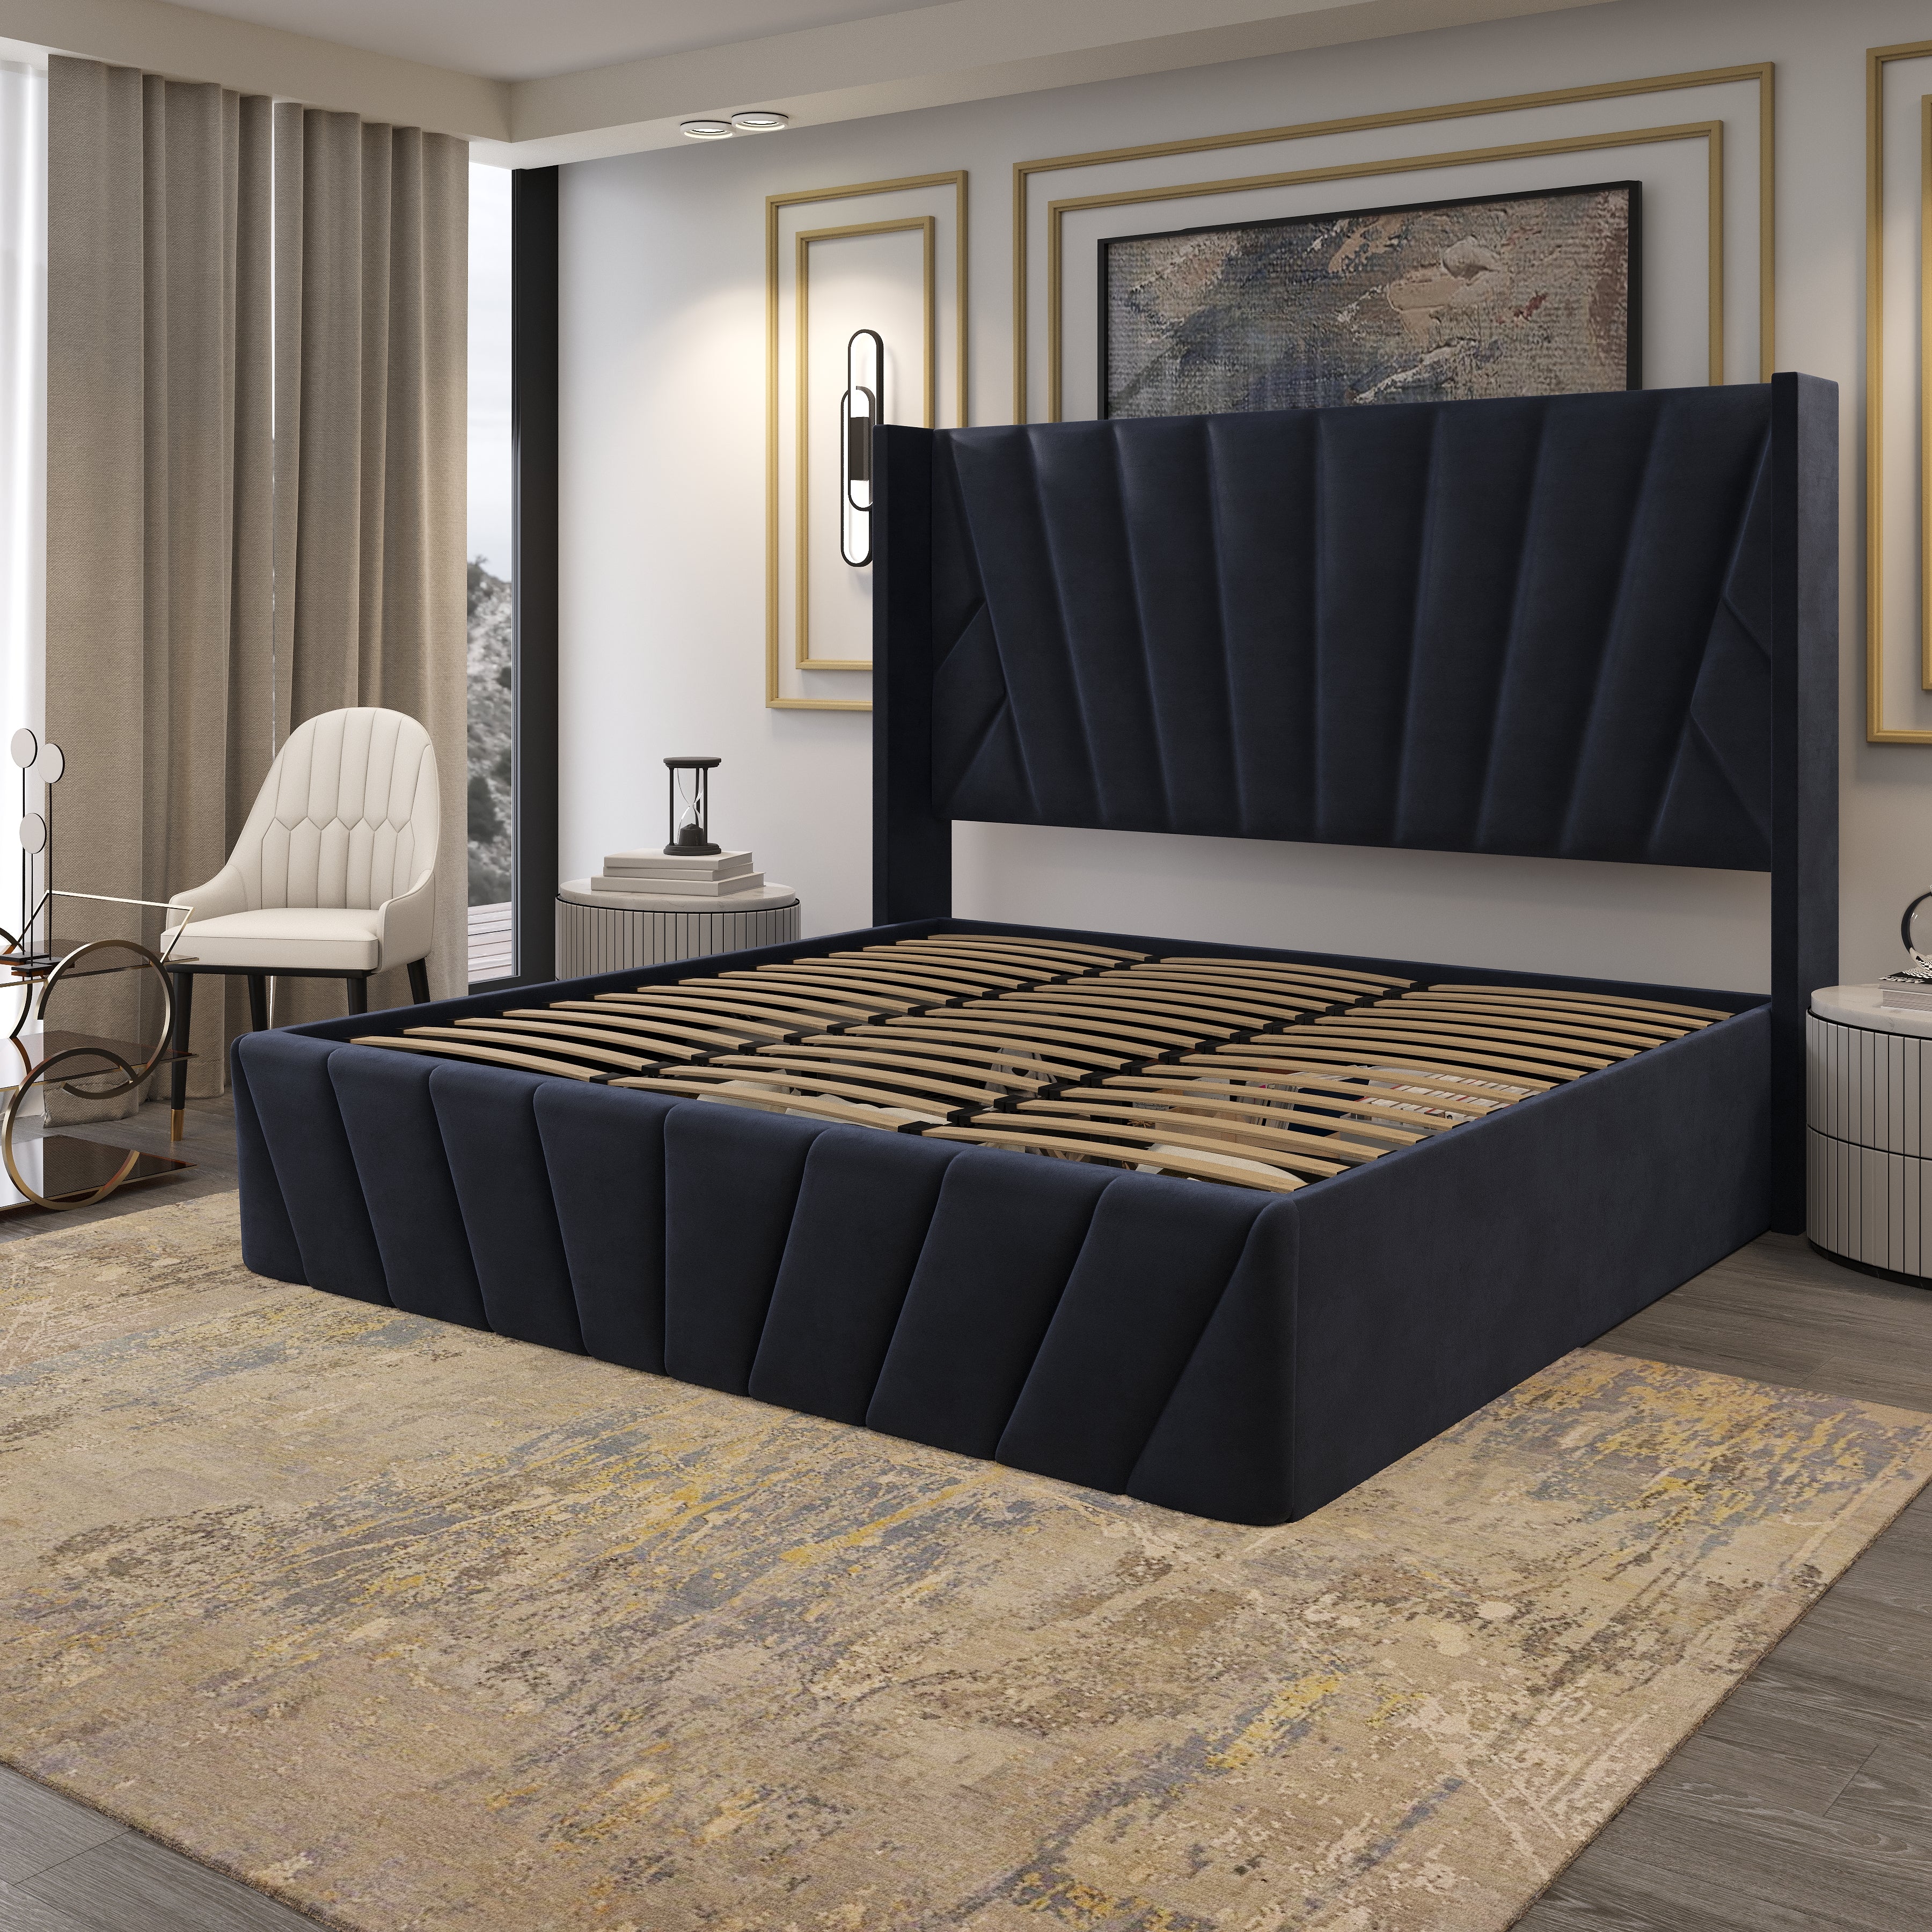 Velets Eva Contemporary Mid-Century Soft Padded Upholstered Platform Storage Bed Frame with Hydraulic Gas Lift Storage - Solid Wood Frame, Wood Slat System & Smart Hydraulic Under-Bed Storage - Black